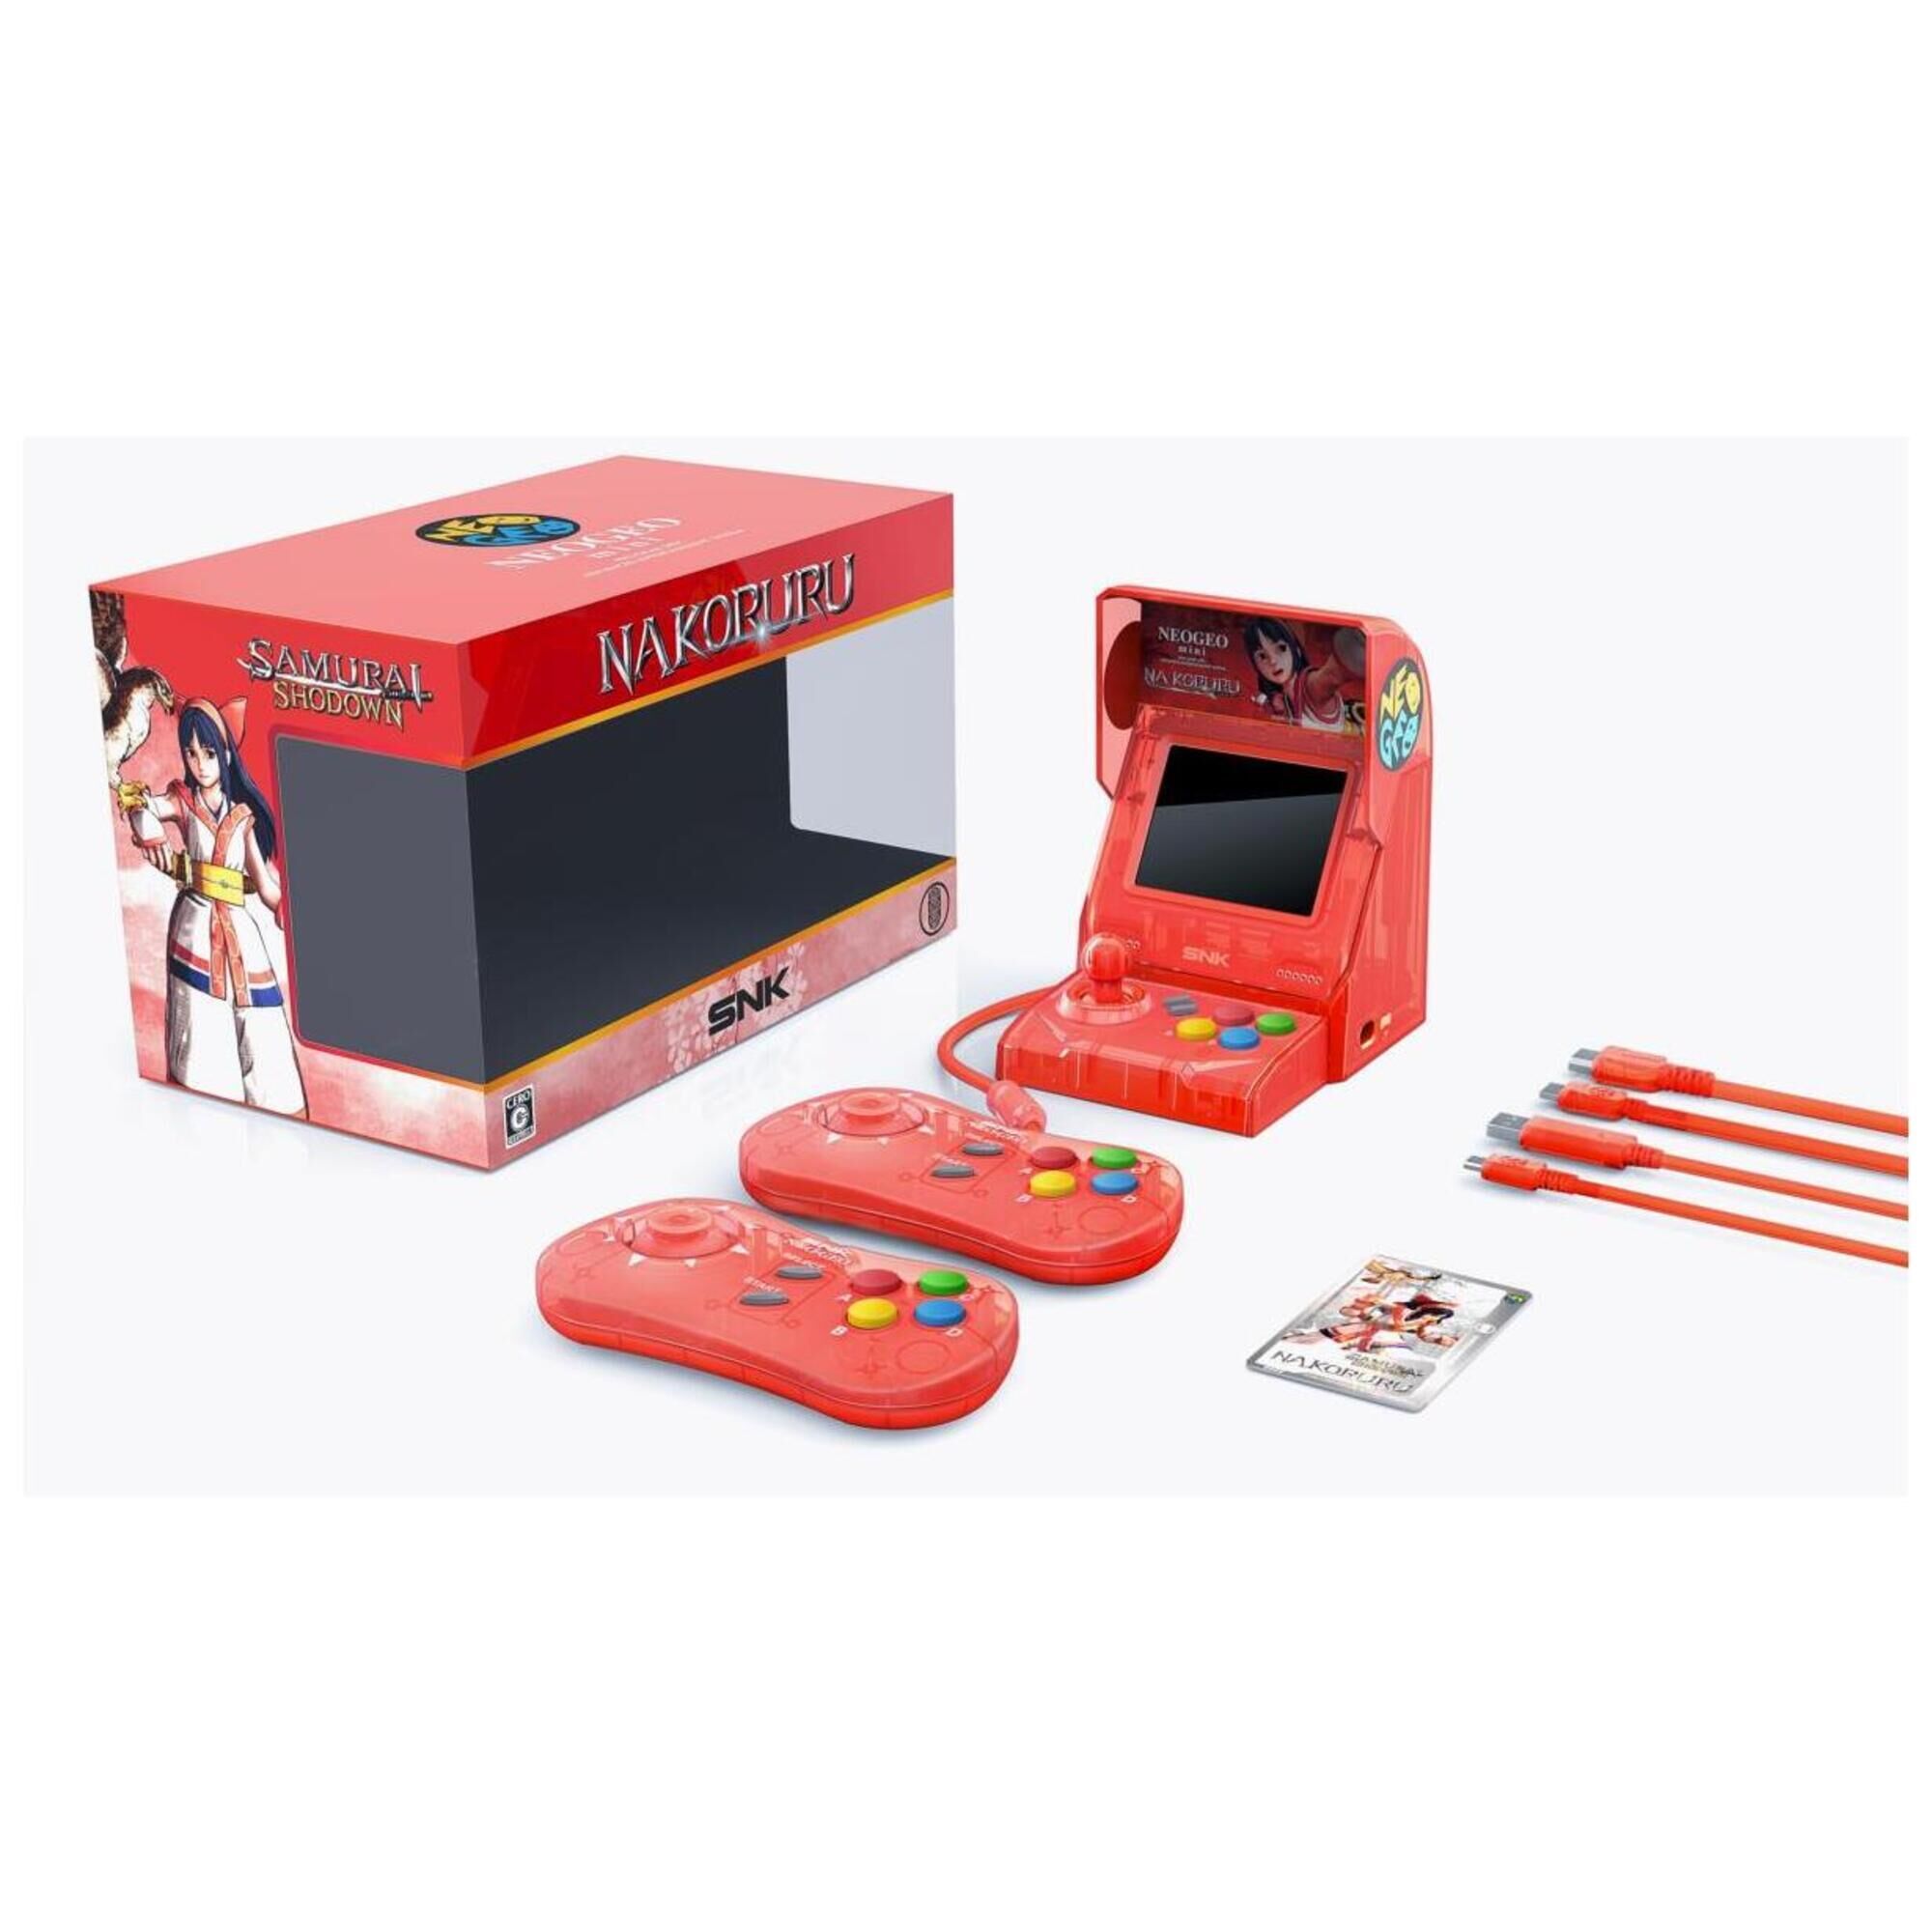 Atari Console Neo Geo mini Samurai Shodown Limited Edition - Nakoruru (rouge) - Neuf